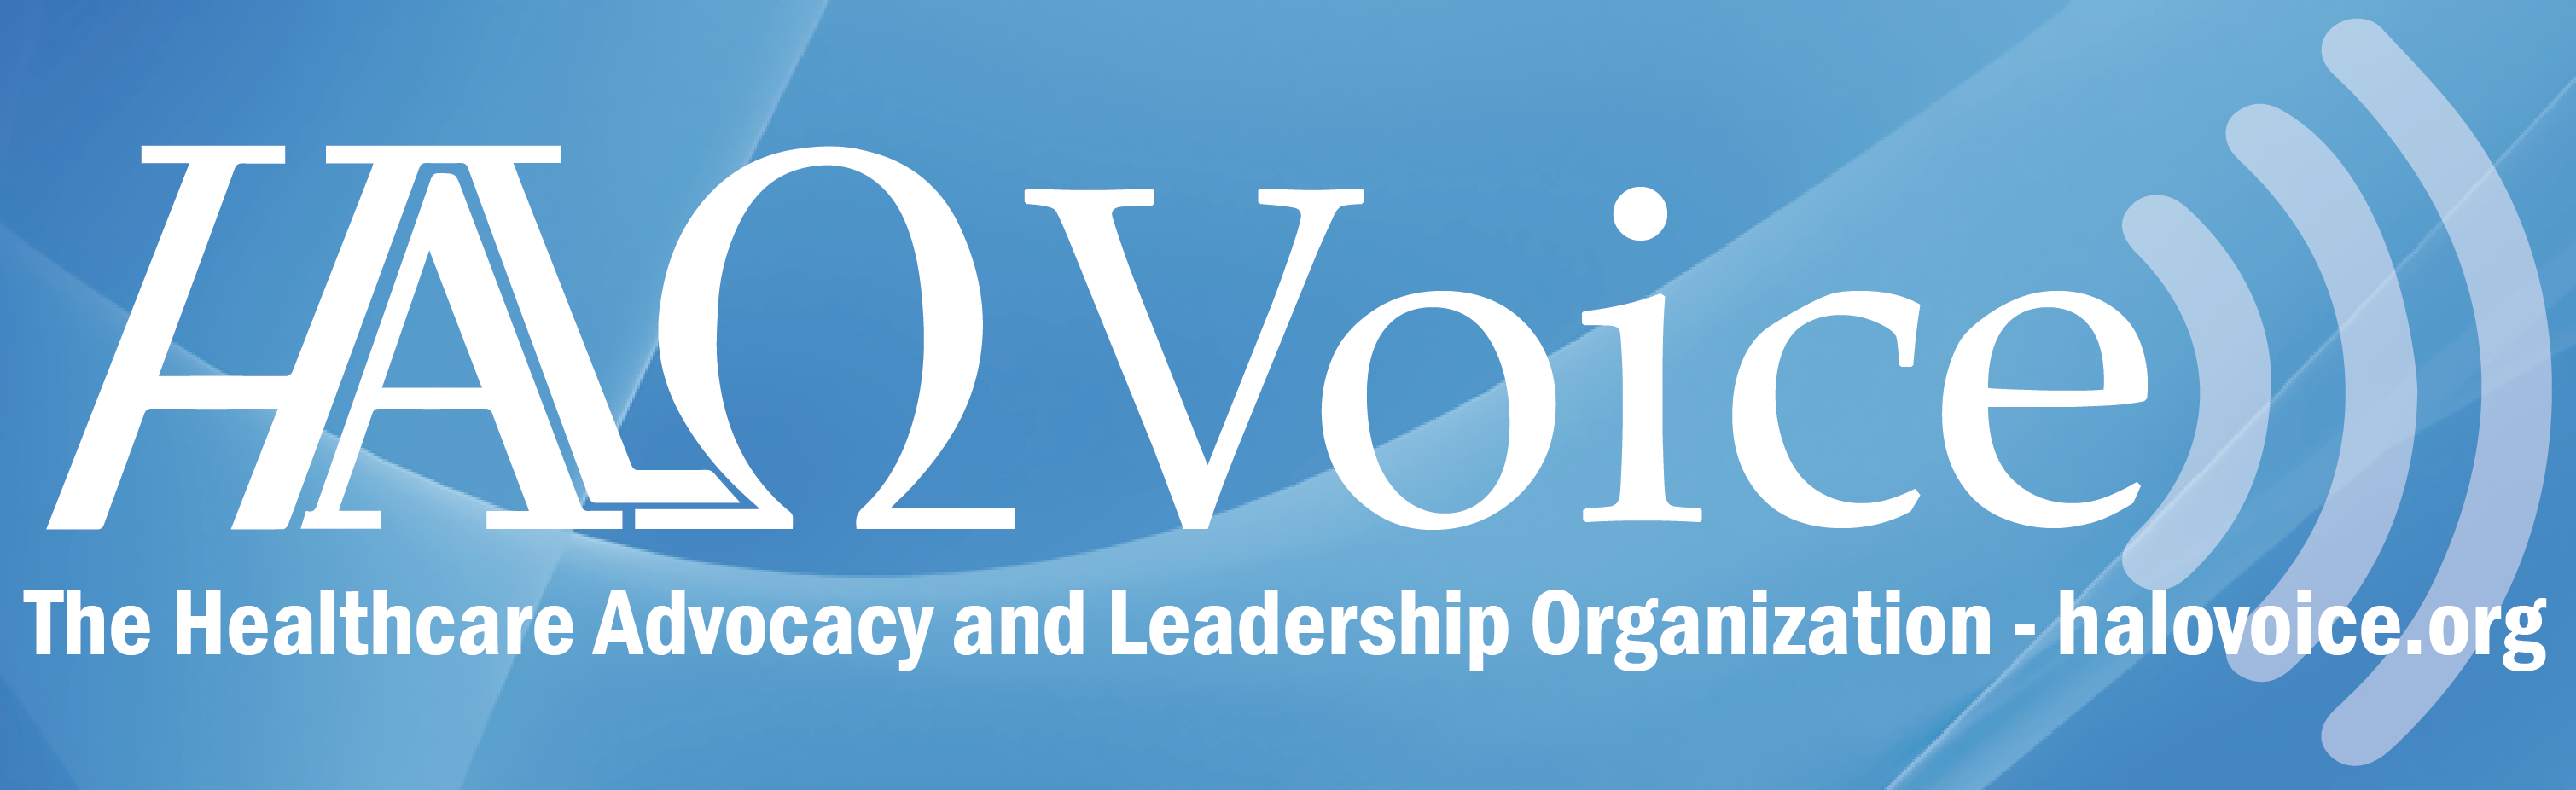 Healthcare Advocacy and Leadership Organization logo